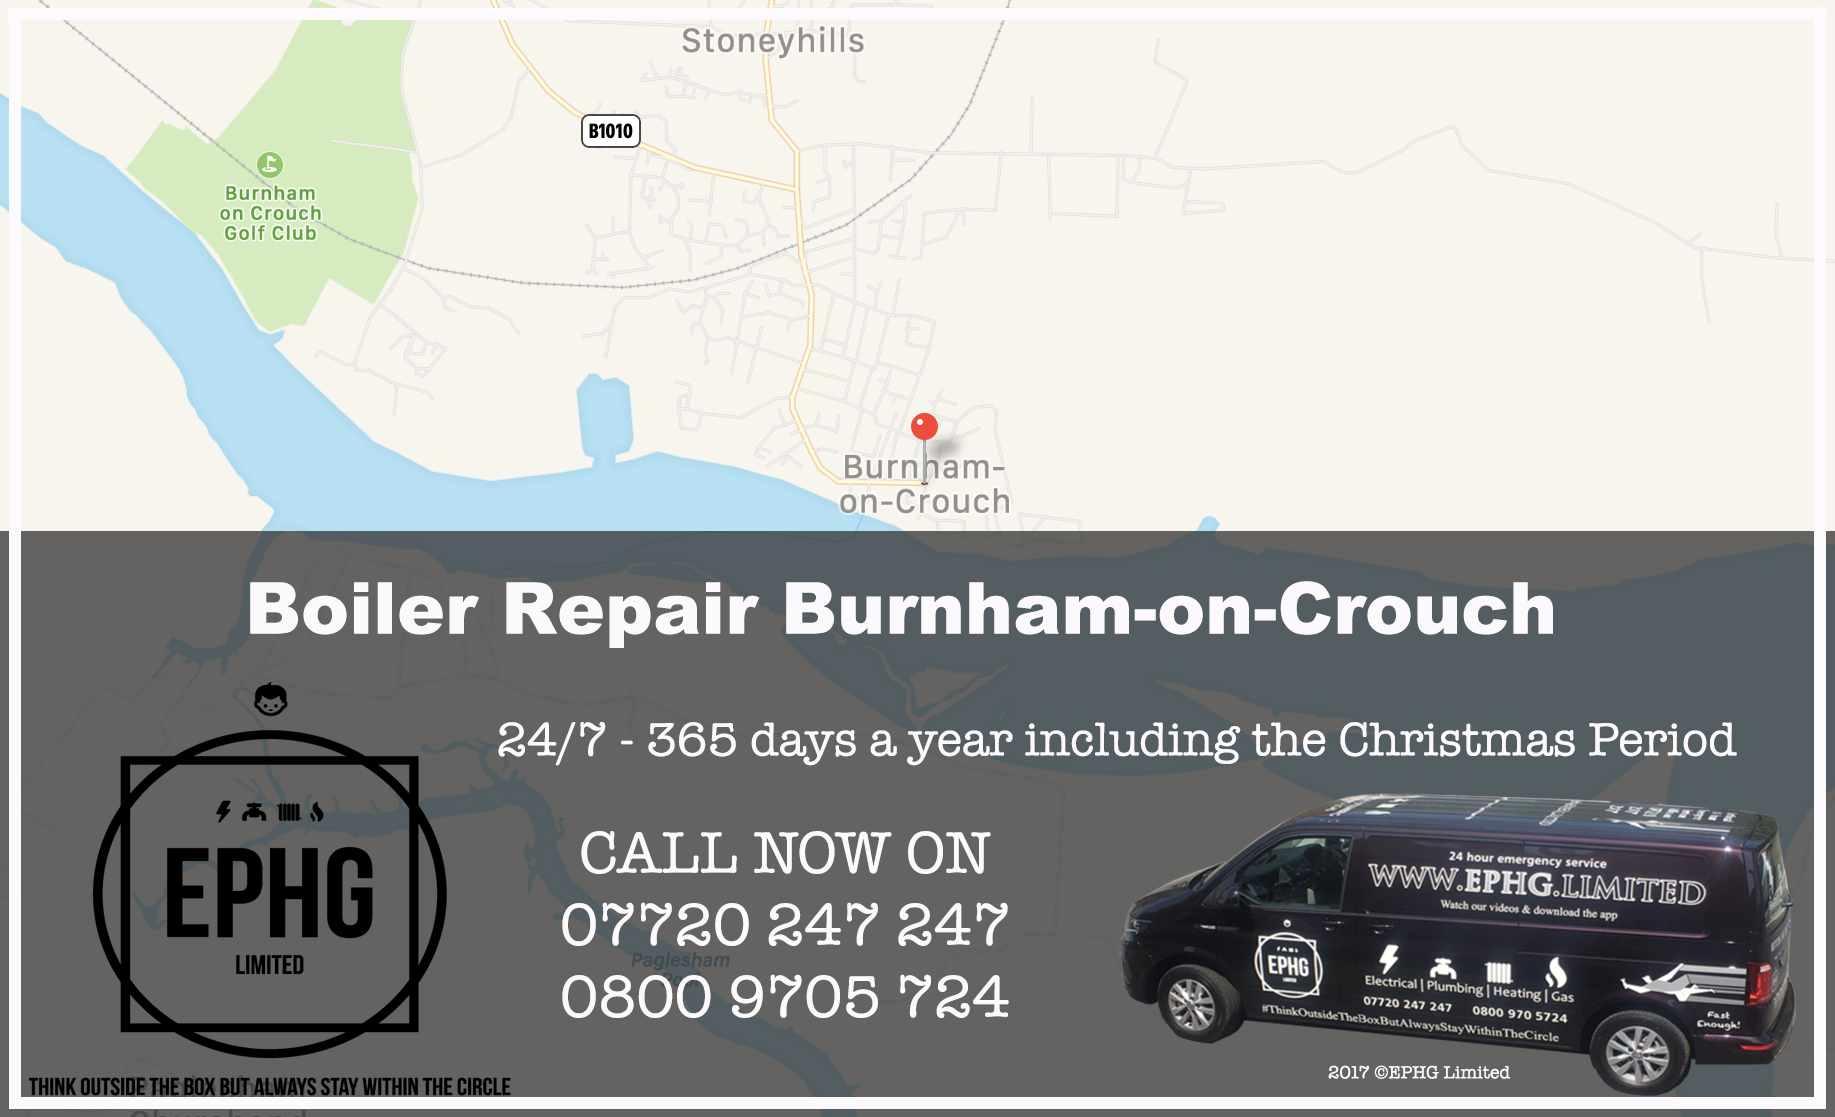 24 Hour Emergency Boiler Repair Burnham-on-Crouch